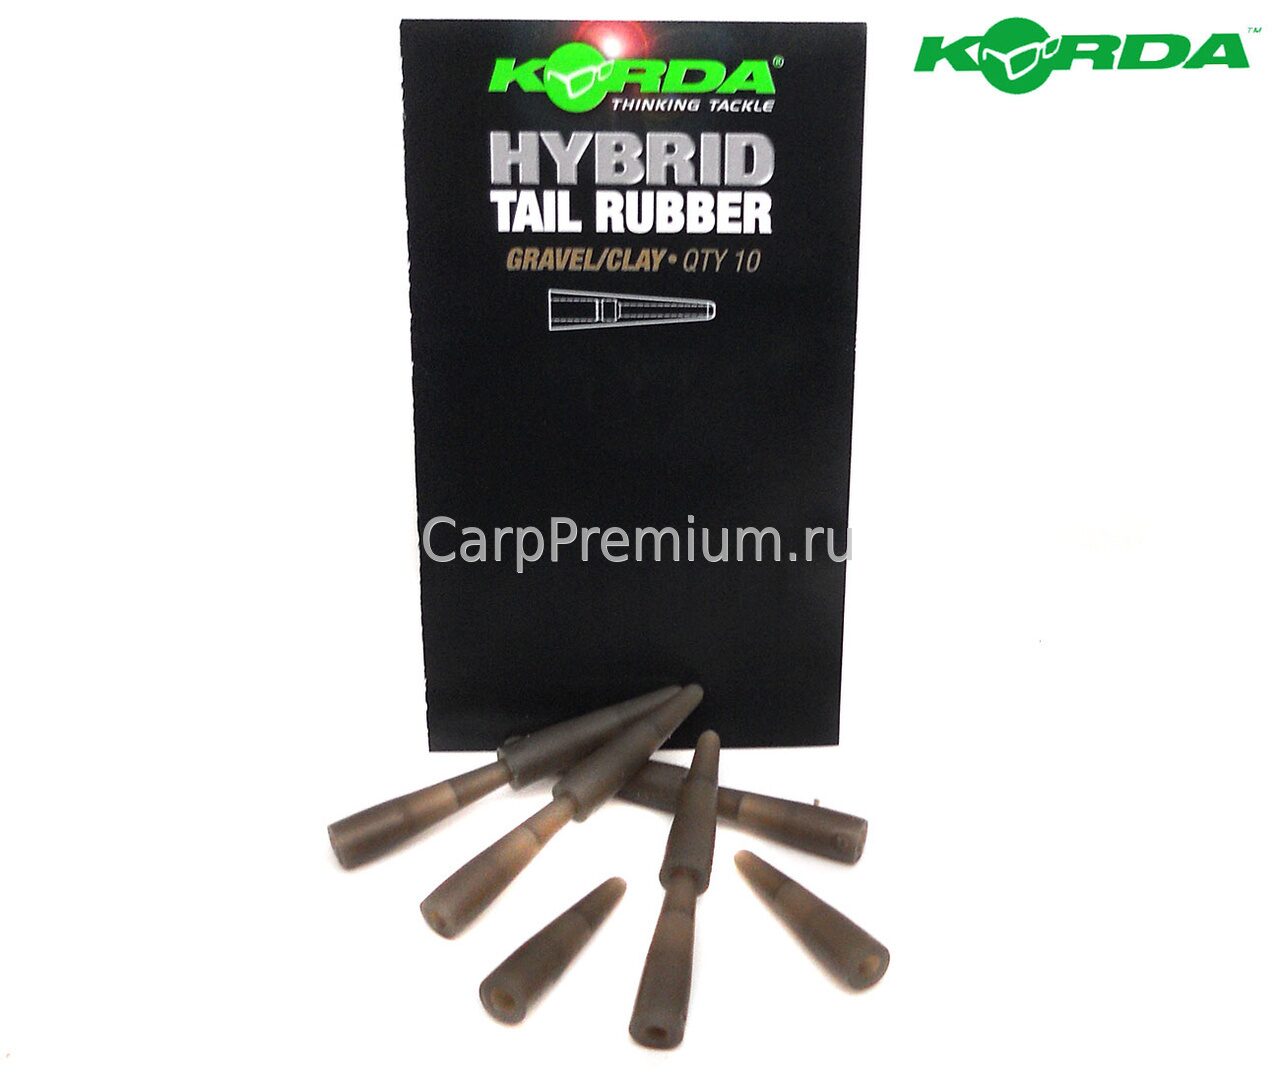 Конуса для безопасных клипс Коричневые Korda (Корда) - Hybrid Tail Rubber Gravel /Clay, 10 шт